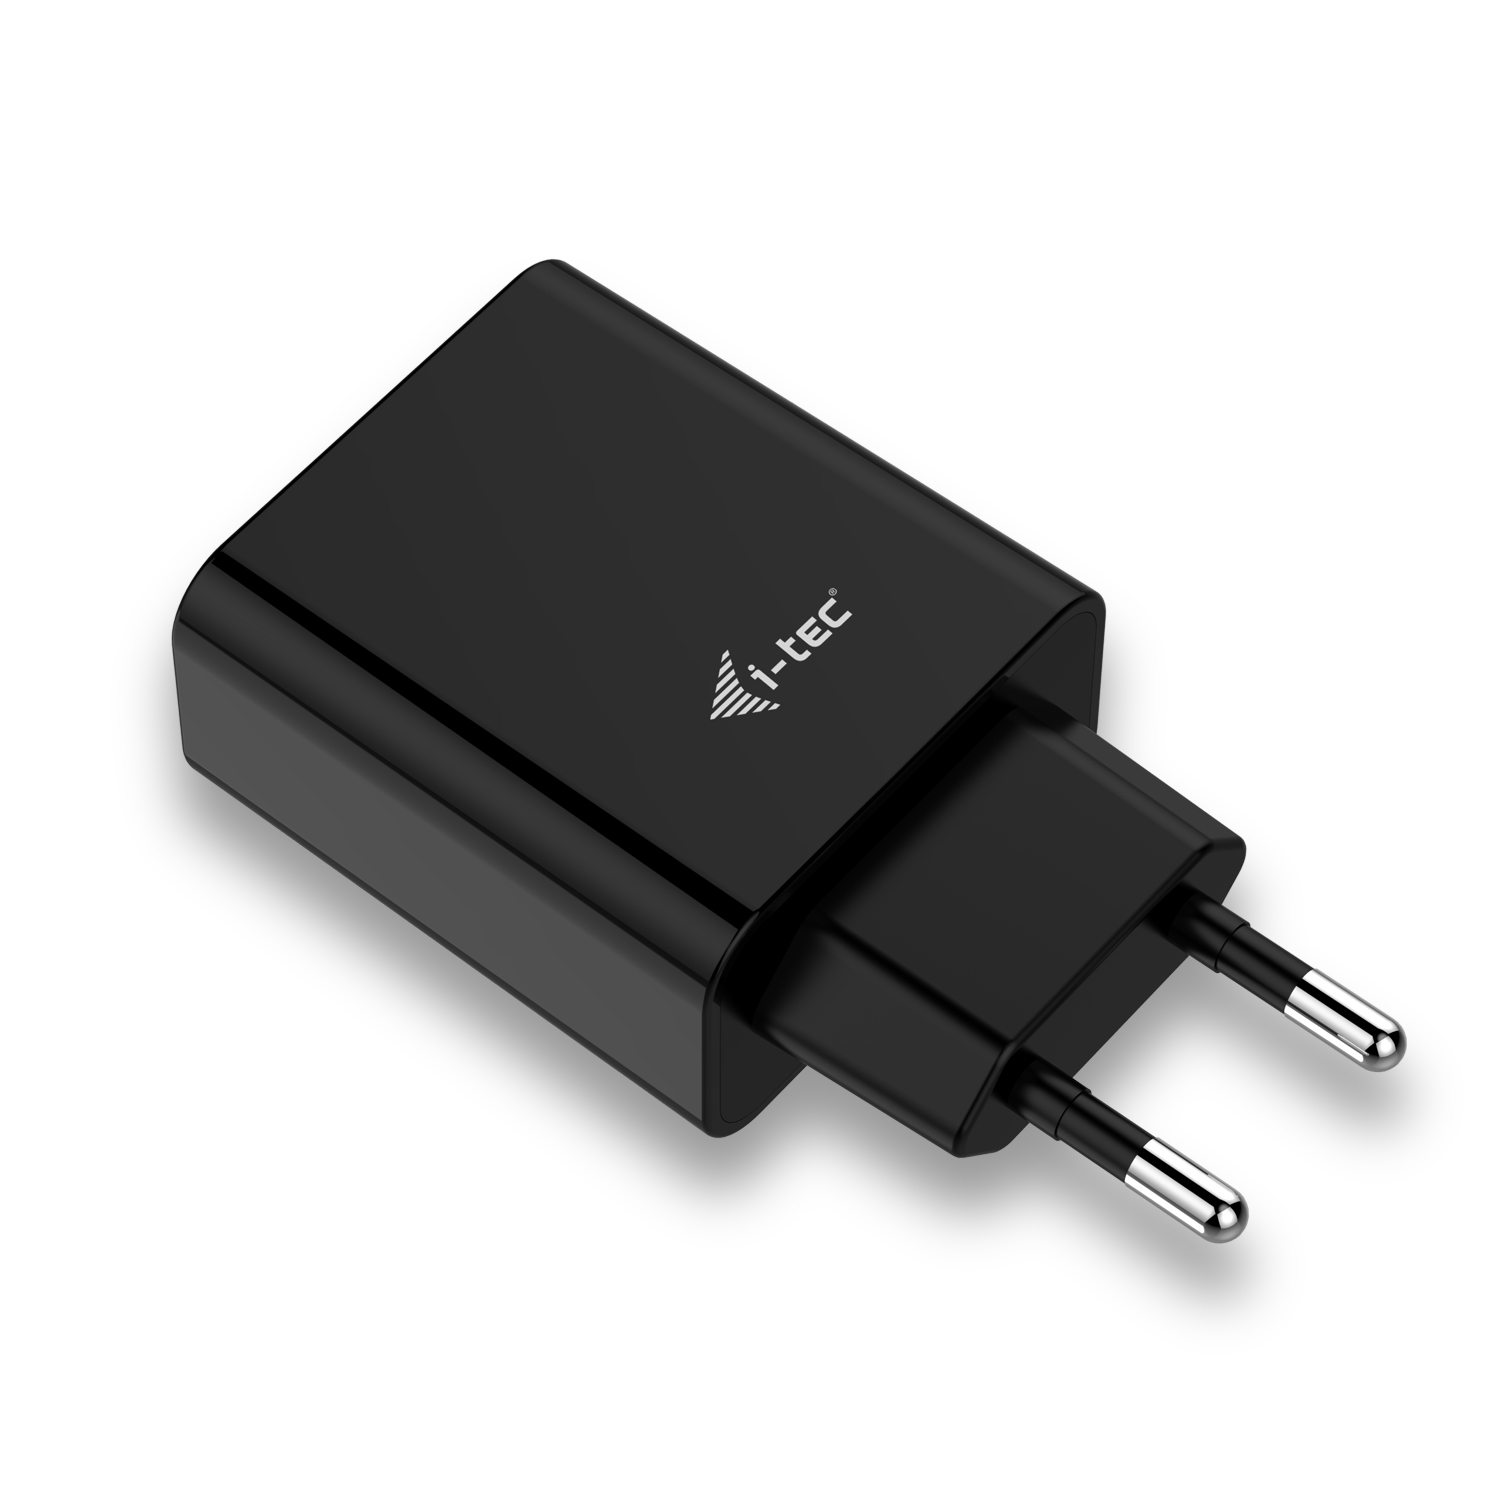 Obrázek i-tec USB Power Charger 2 Port 2.4A Black